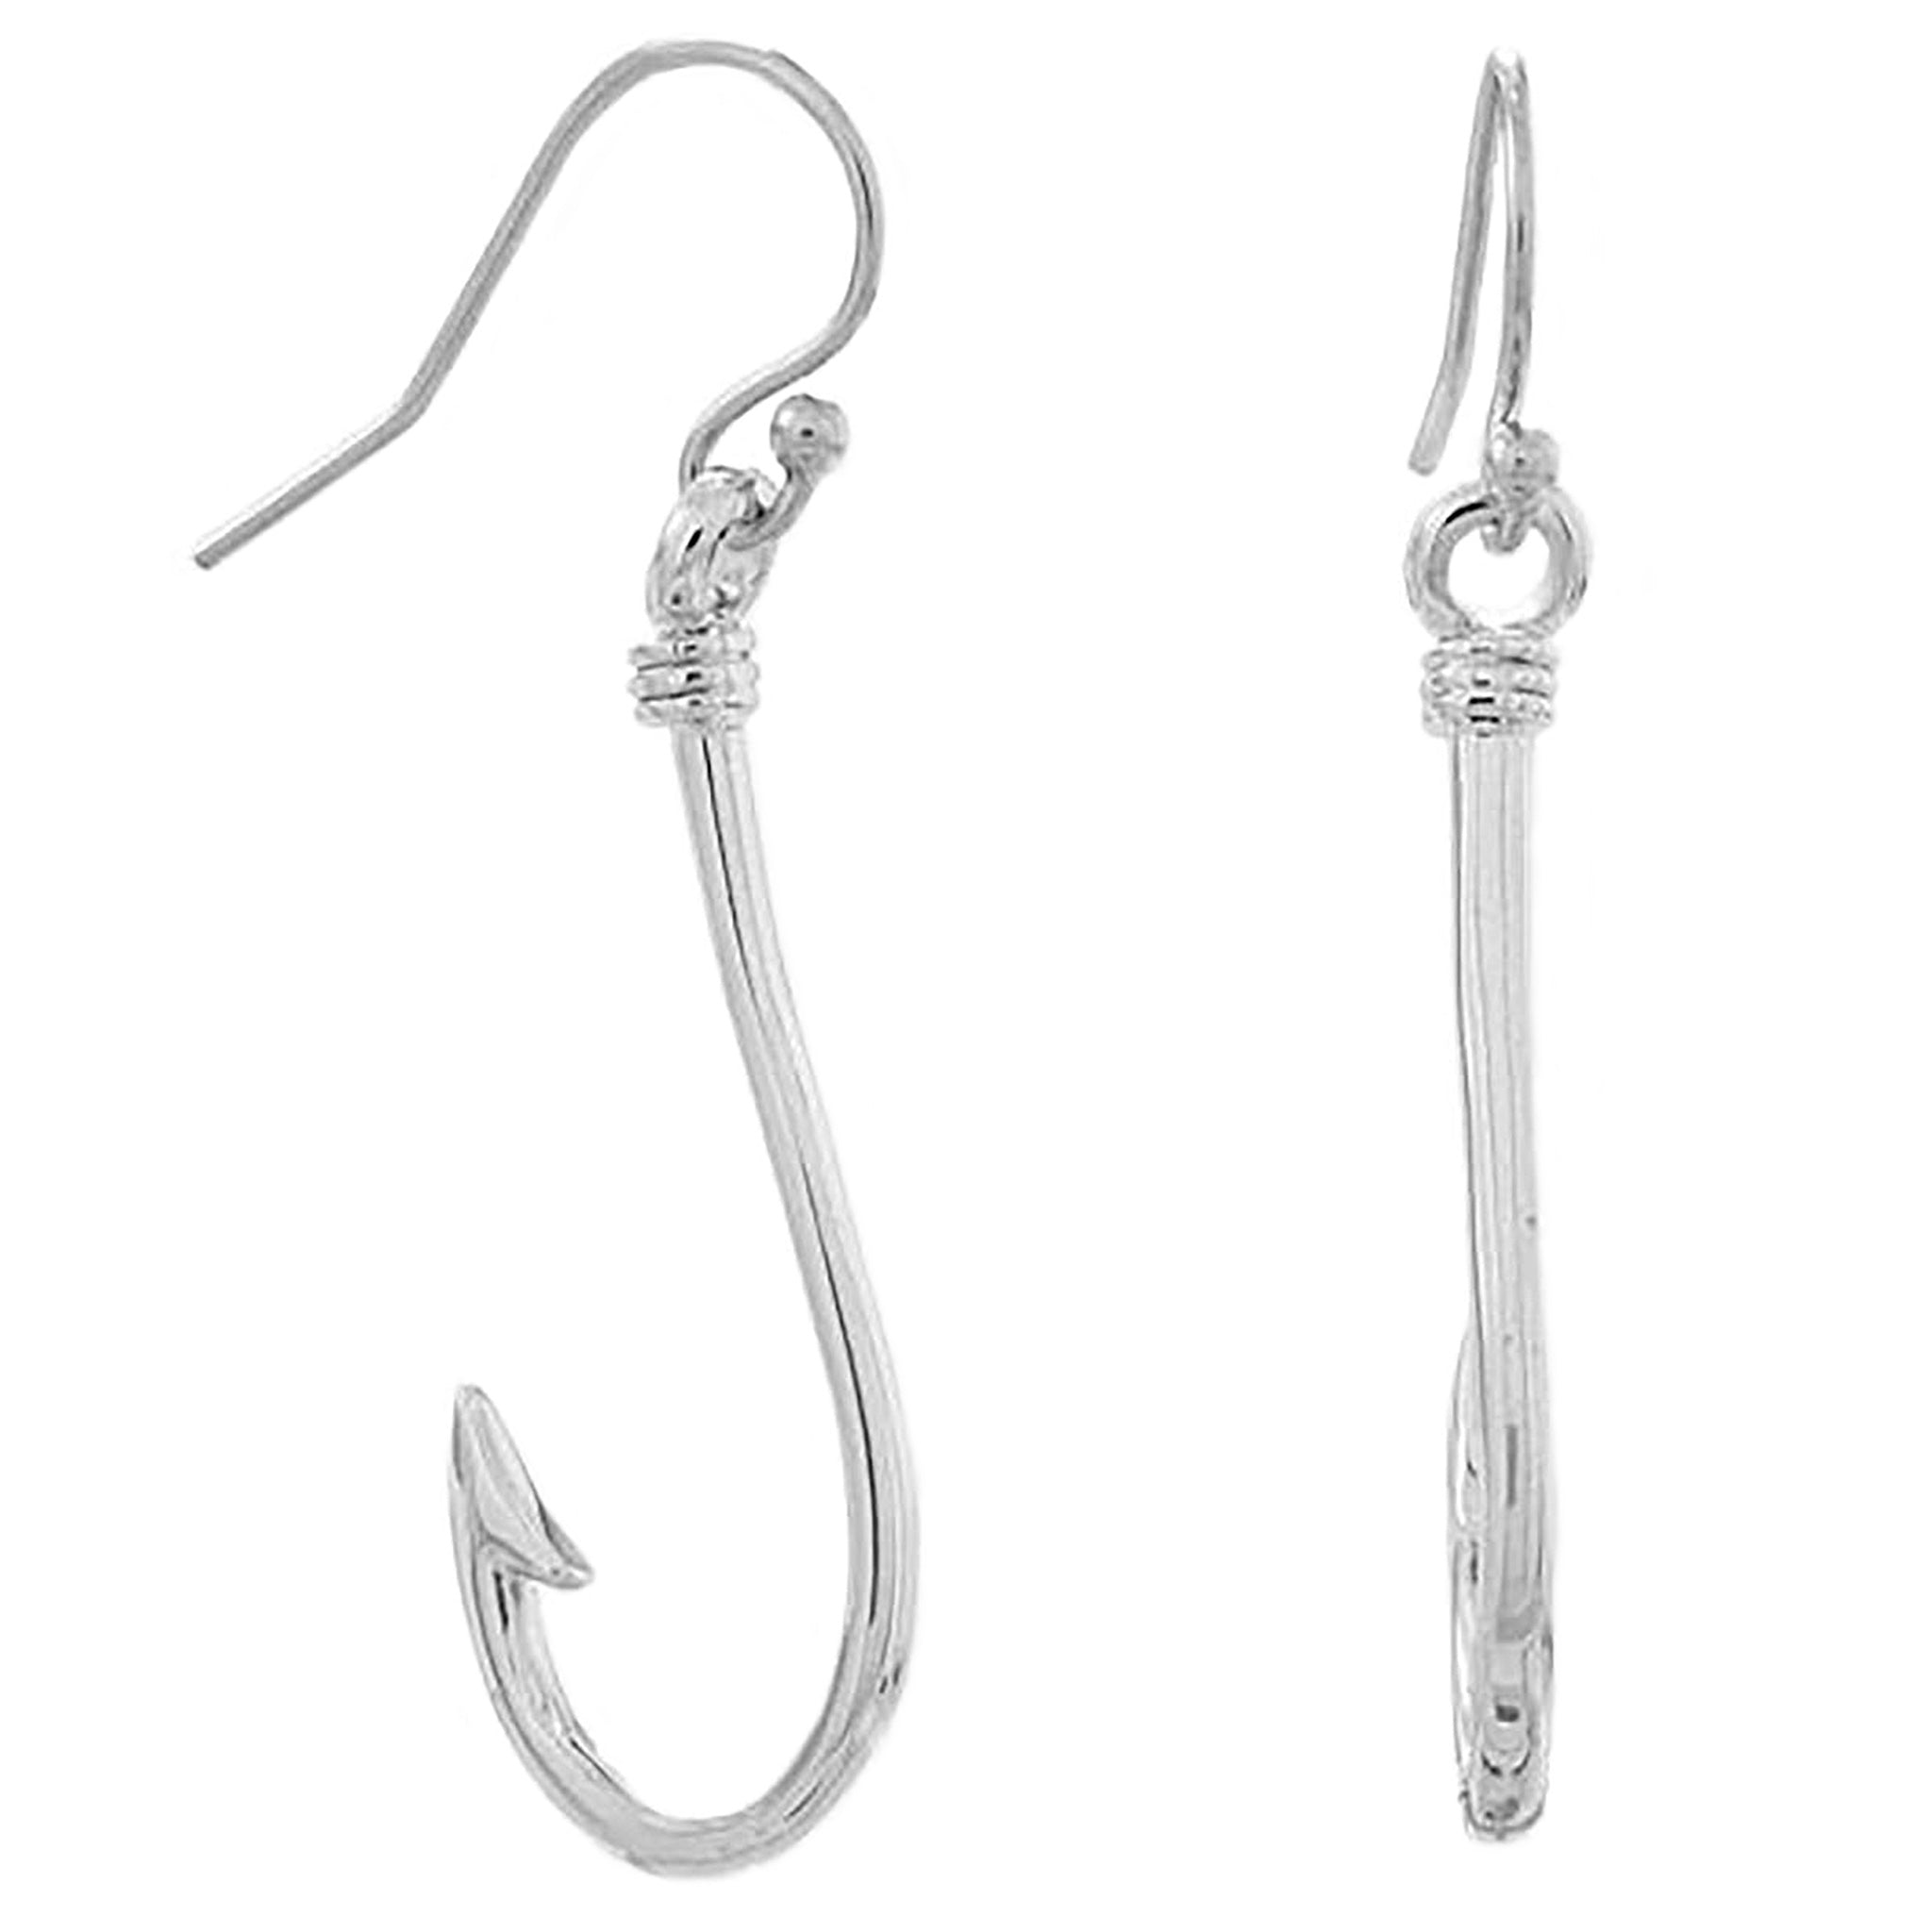 Fish Hook Design Earrings